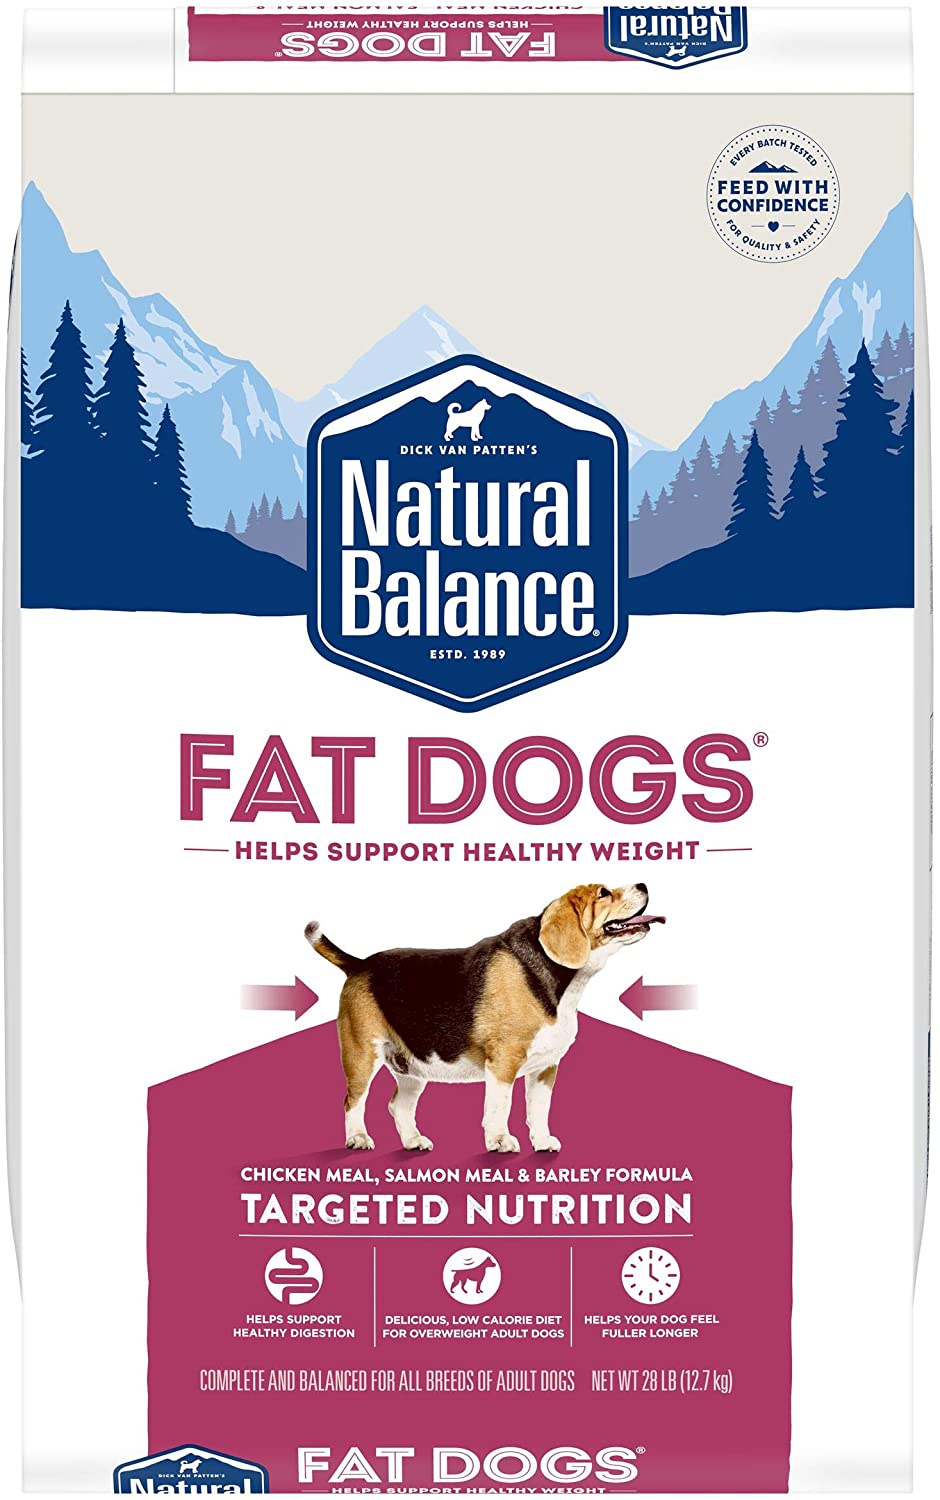 Natural Balance Fat Dogs Dog Food